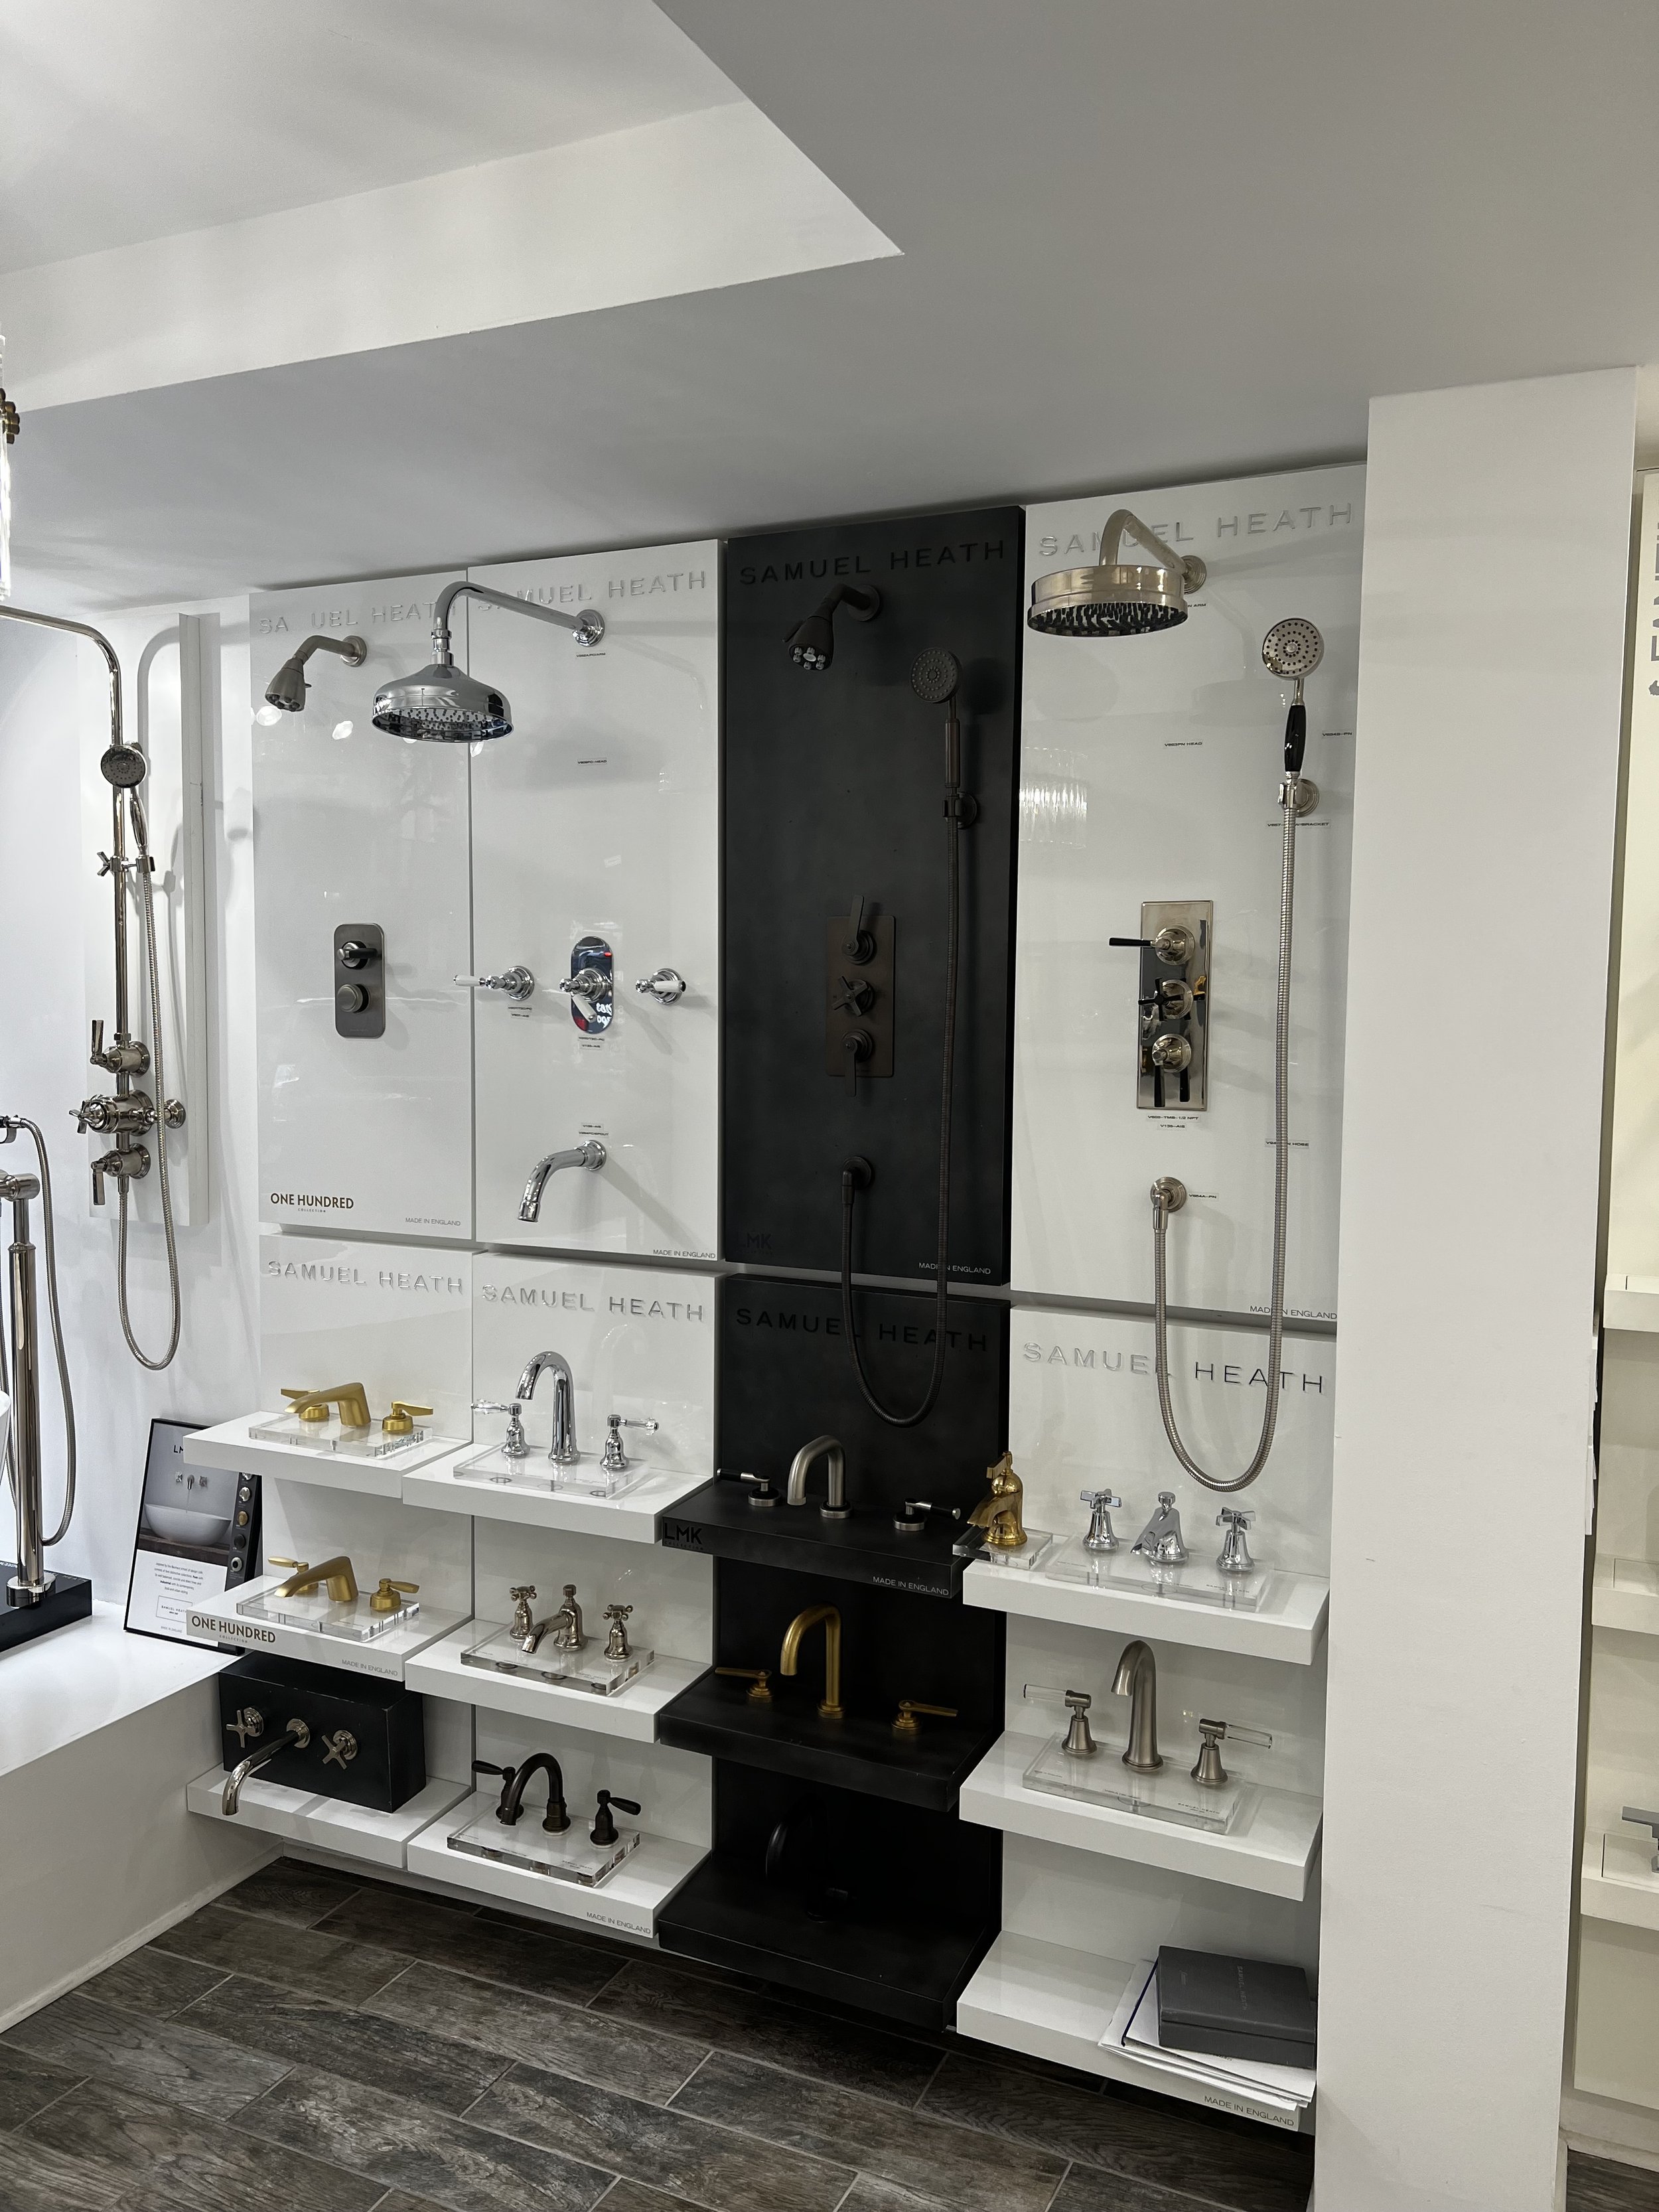 Furniture & Living Solutions / Bathroom Accessories & Sanitary Hardware -  in the Häfele America Shop